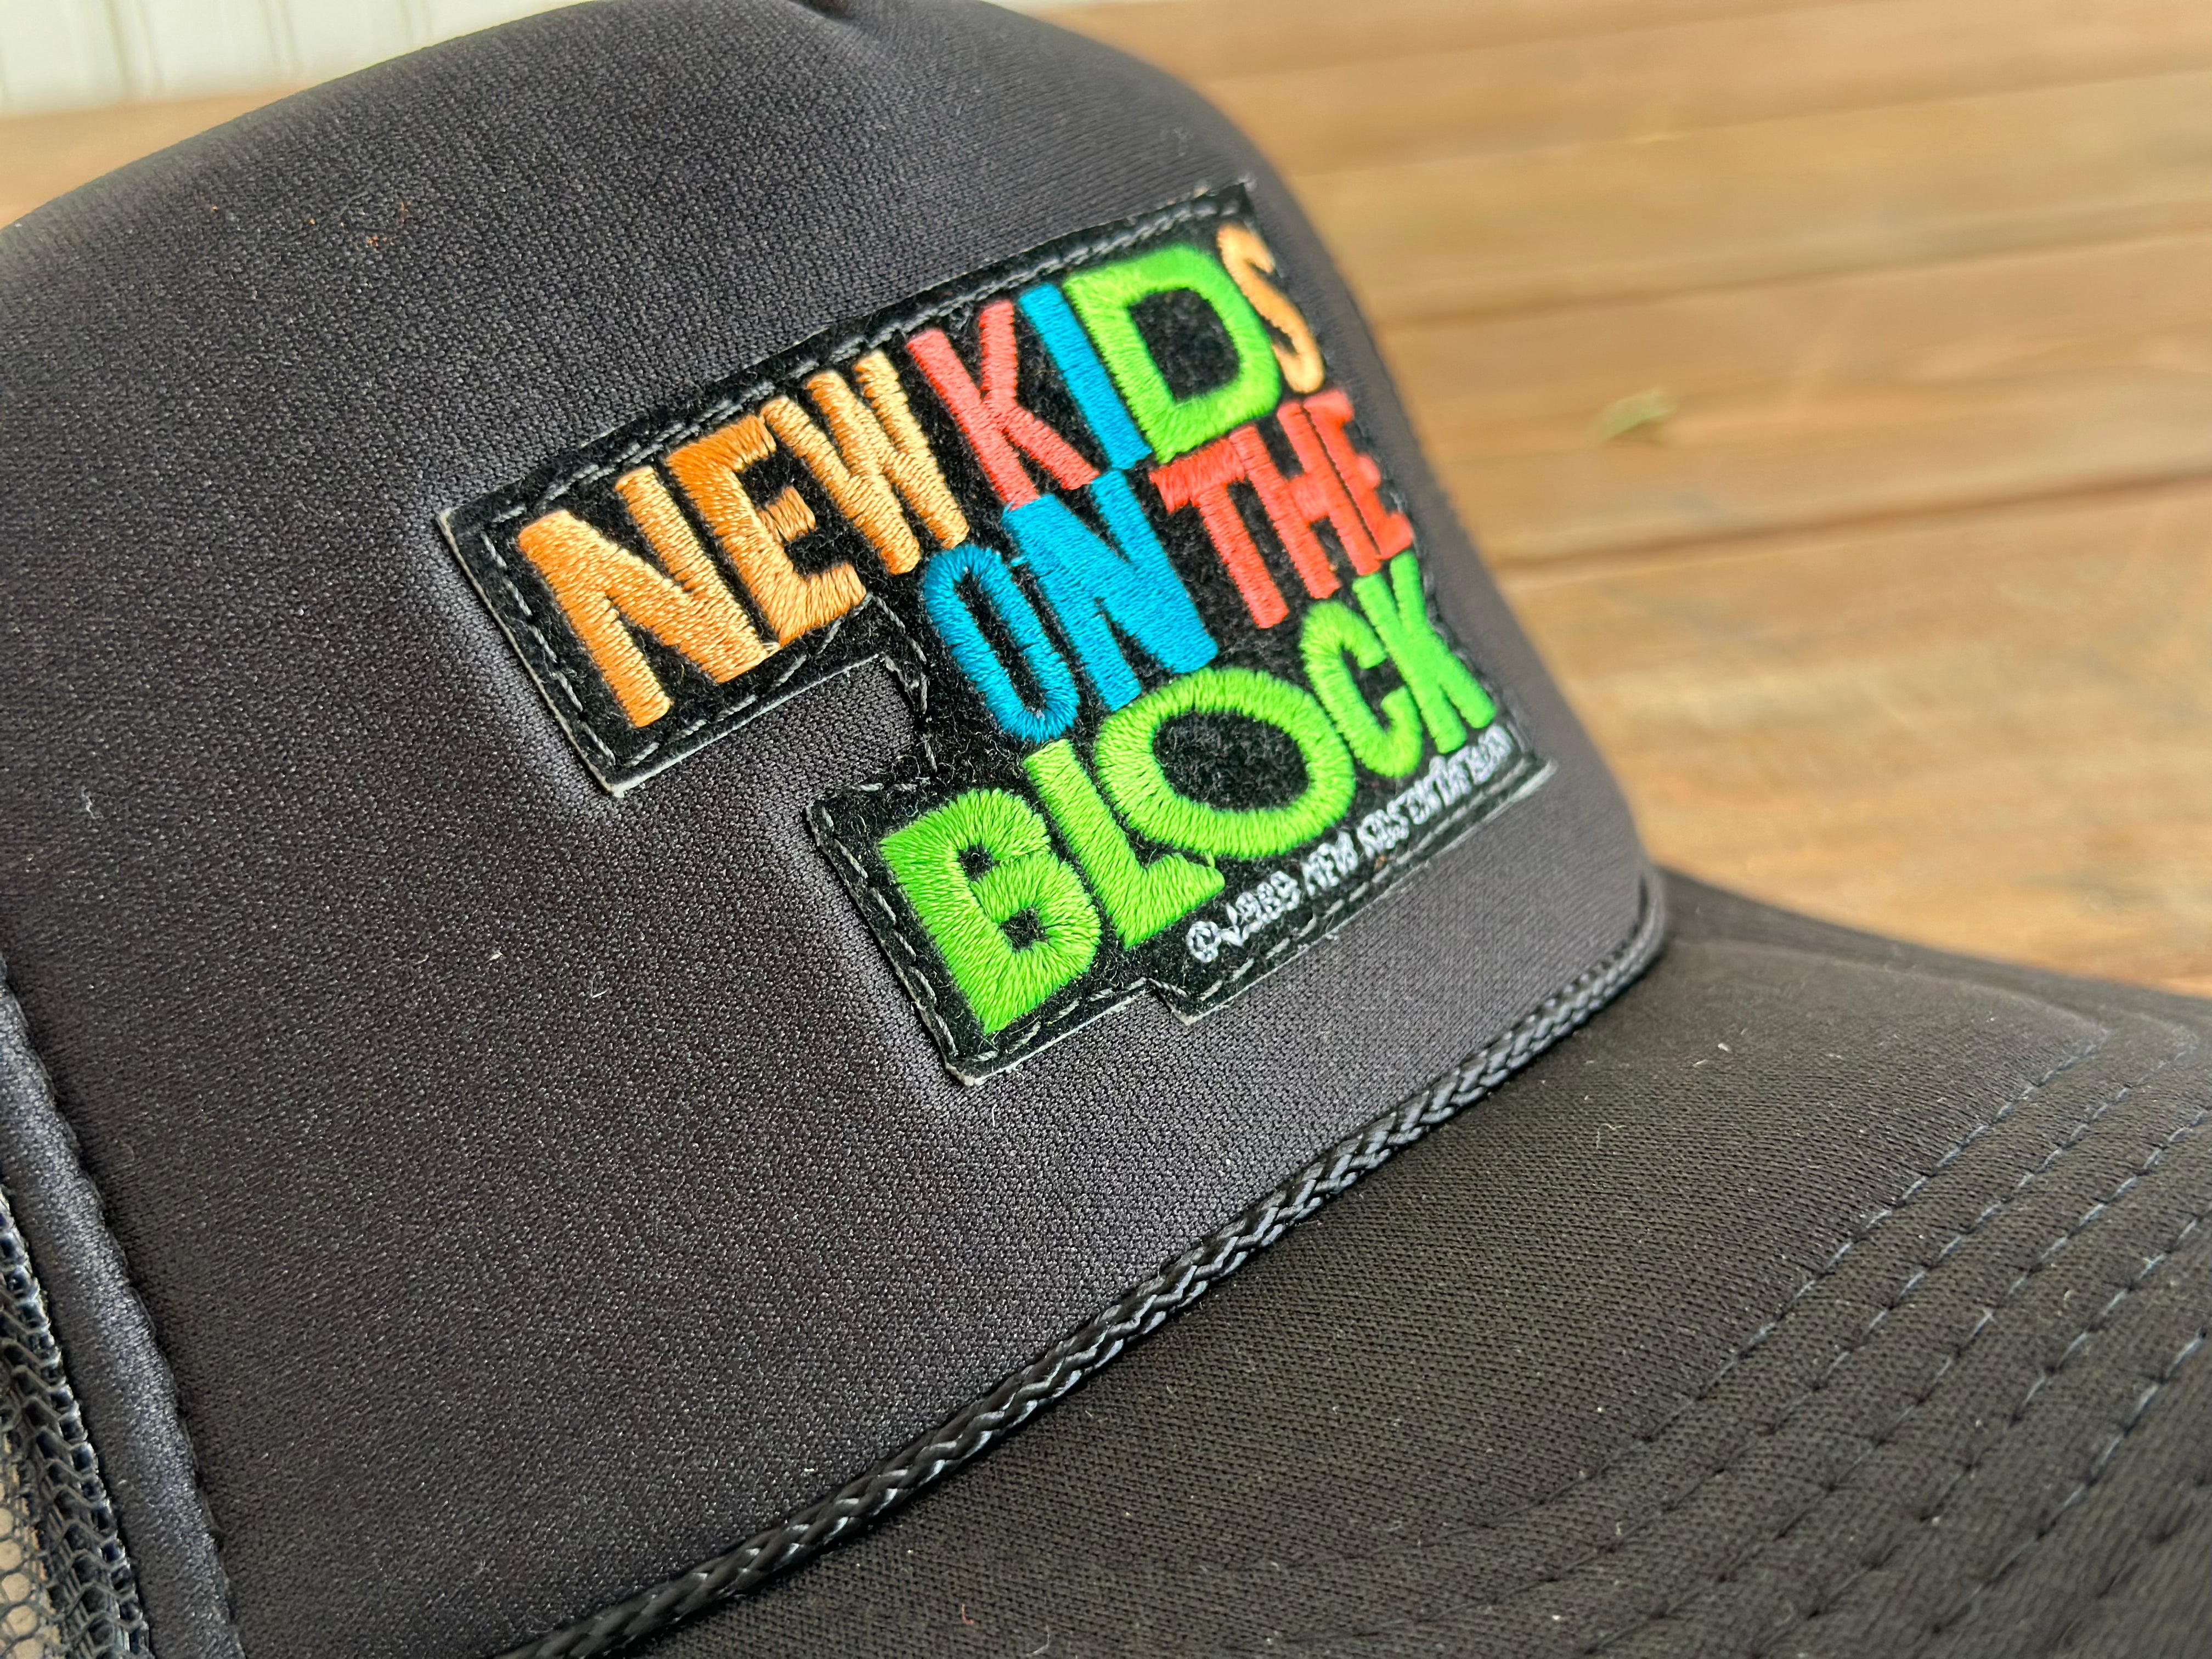 New Kids on the Block on Black Trucker - Hat